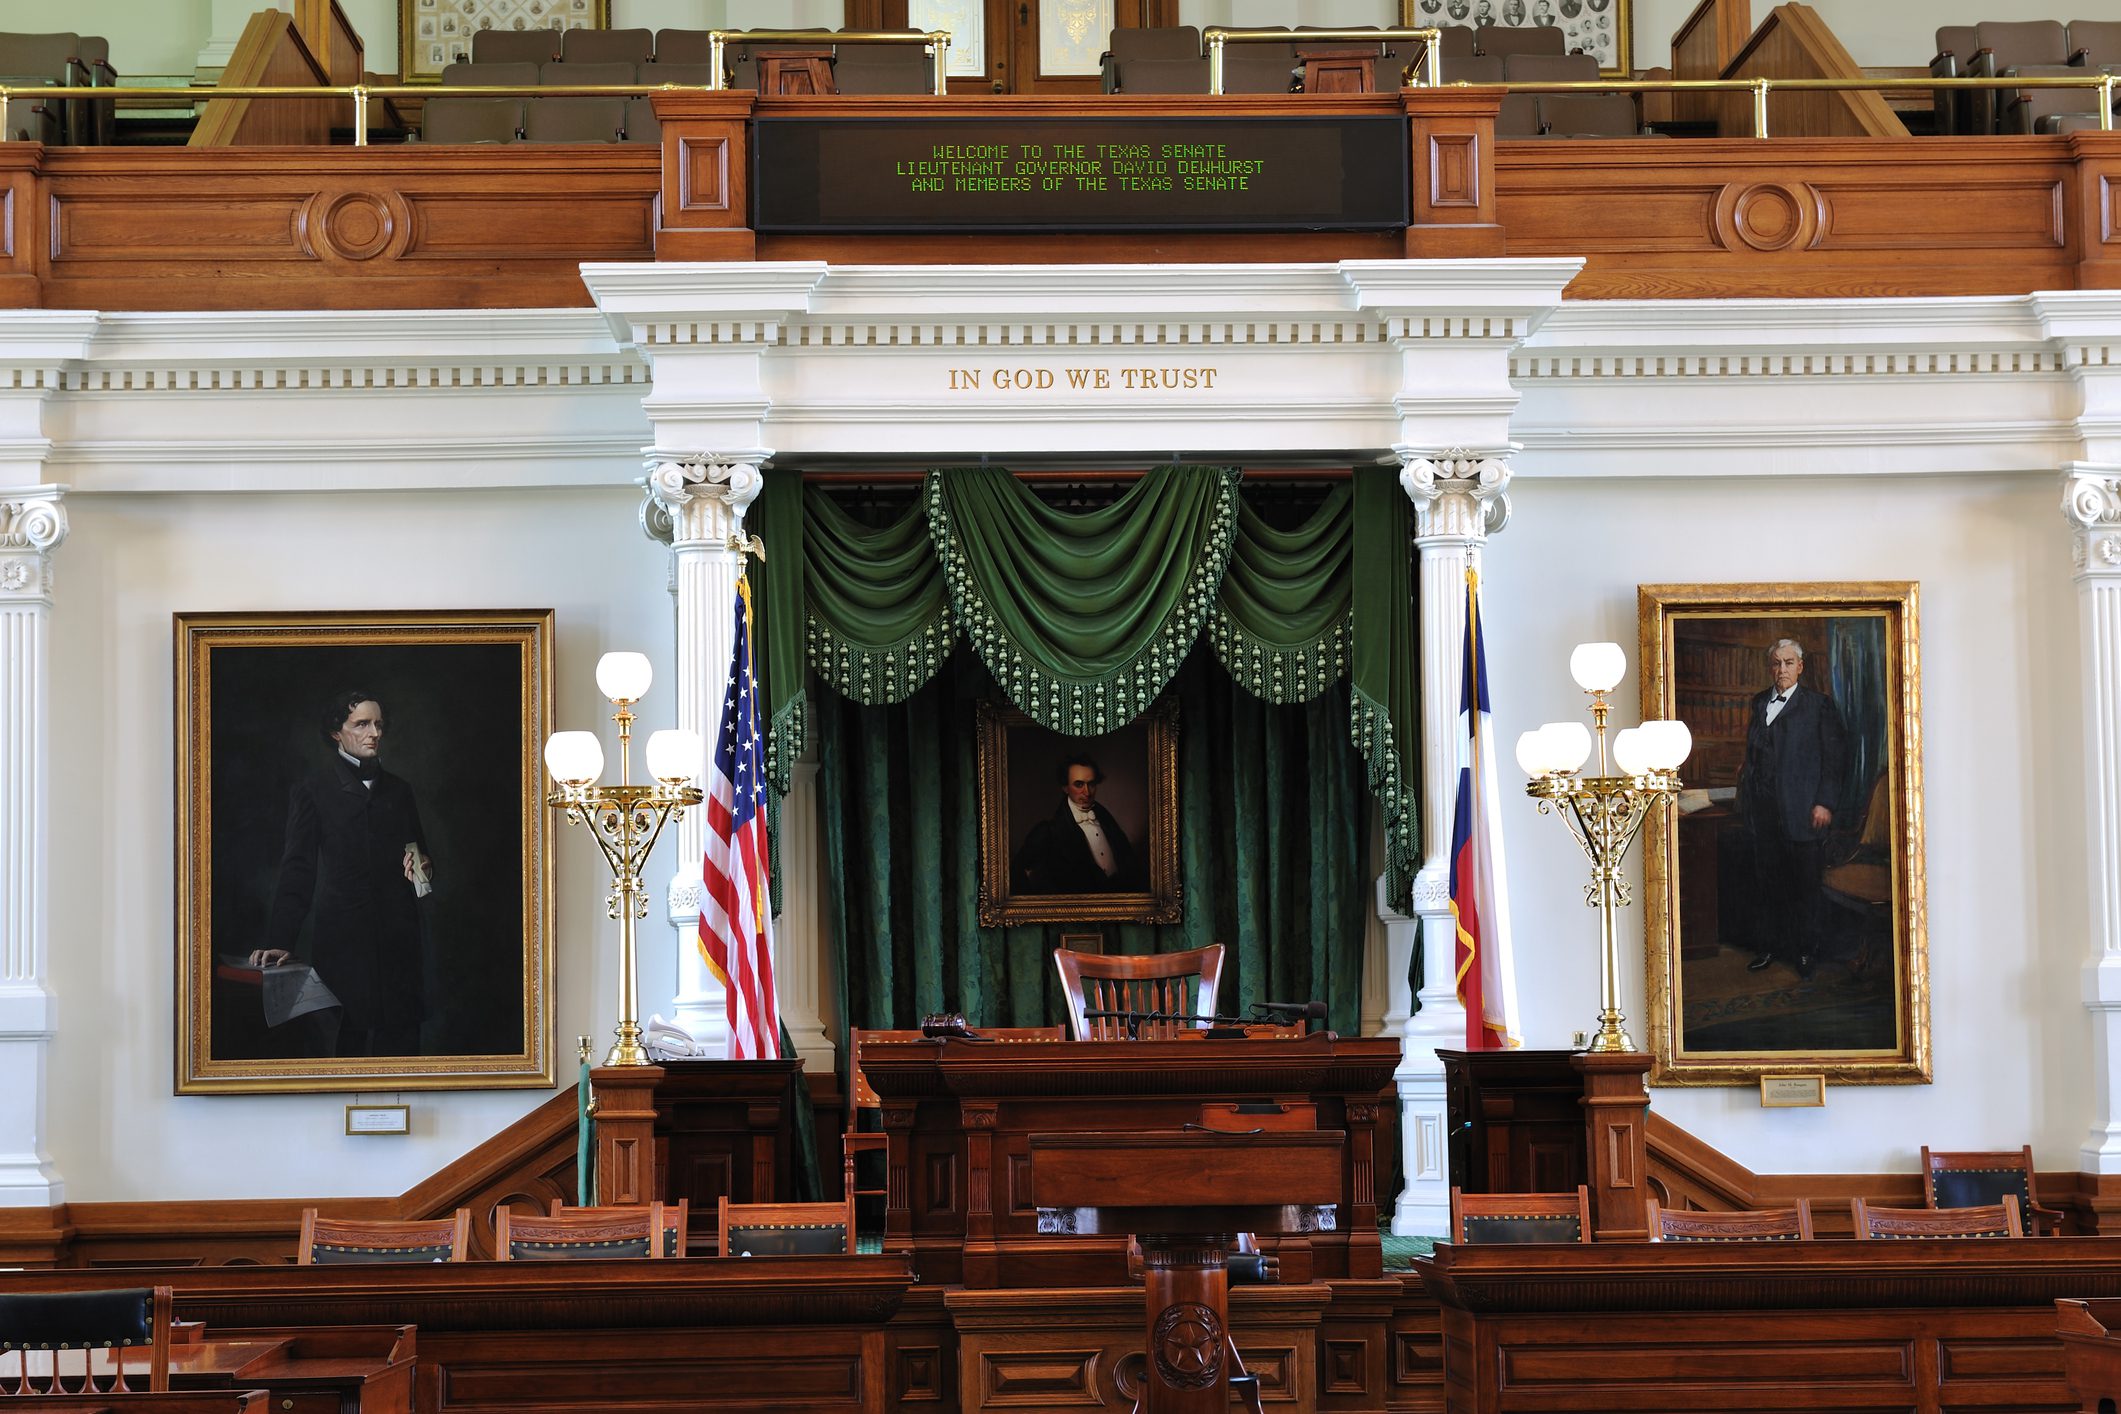 Senate Chamber of Texas